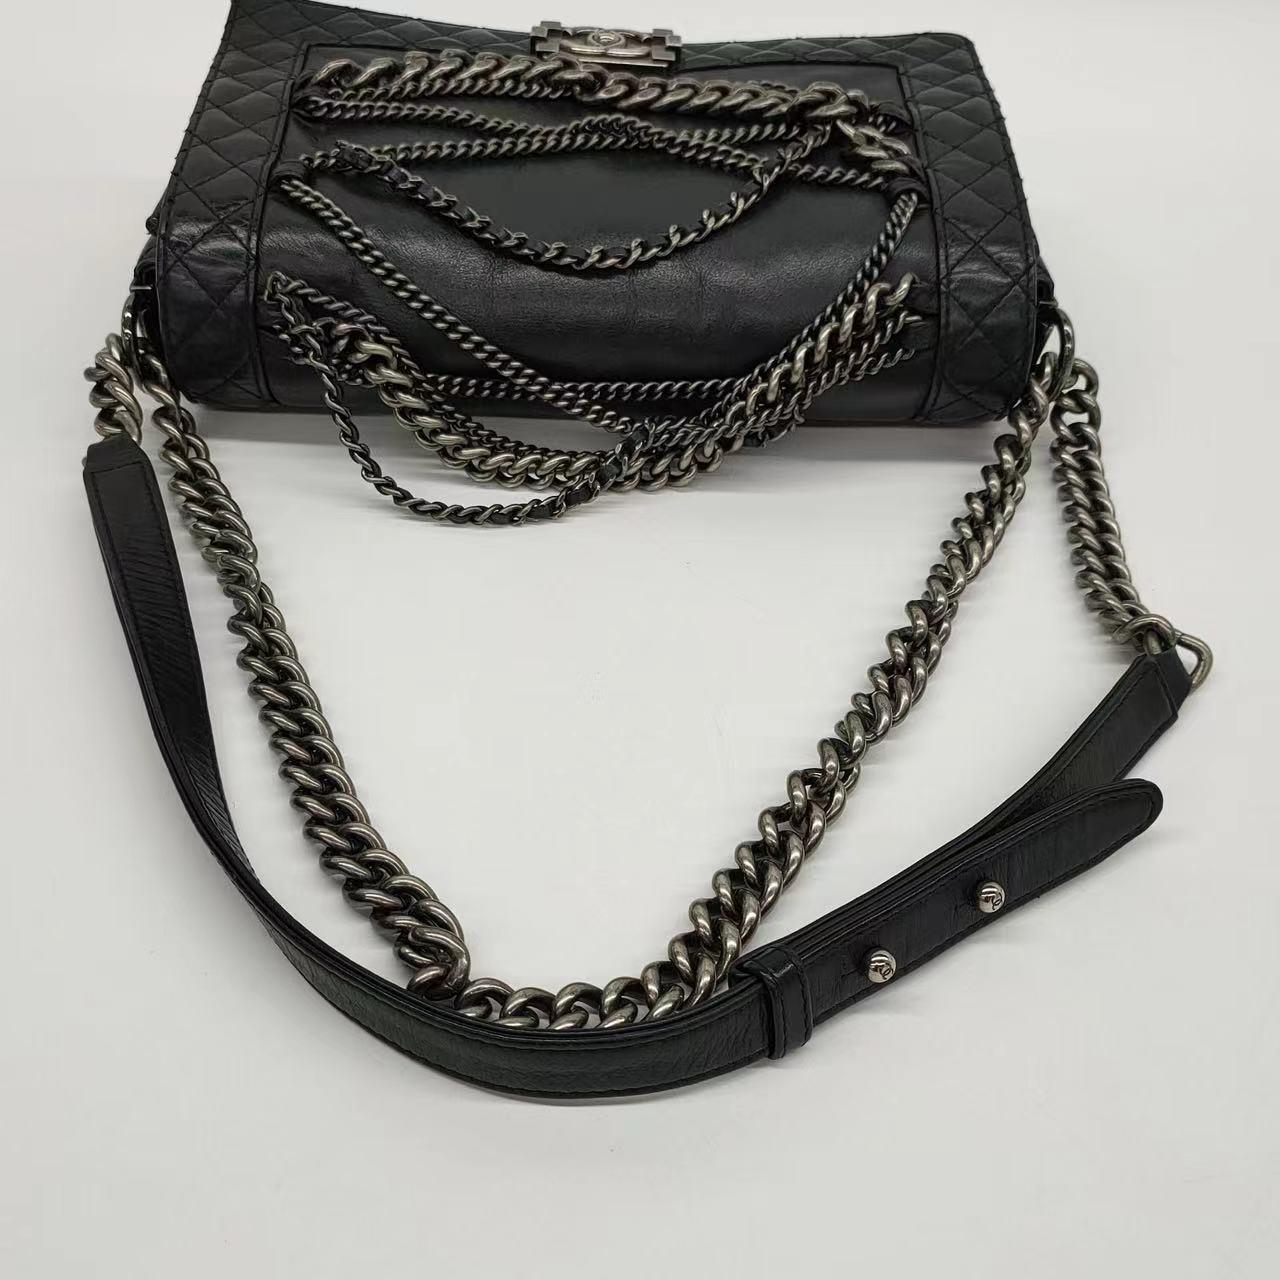 Chanel Enchained Boy Bag 2012 Black Leather Medium Flap Bag For Sale 6